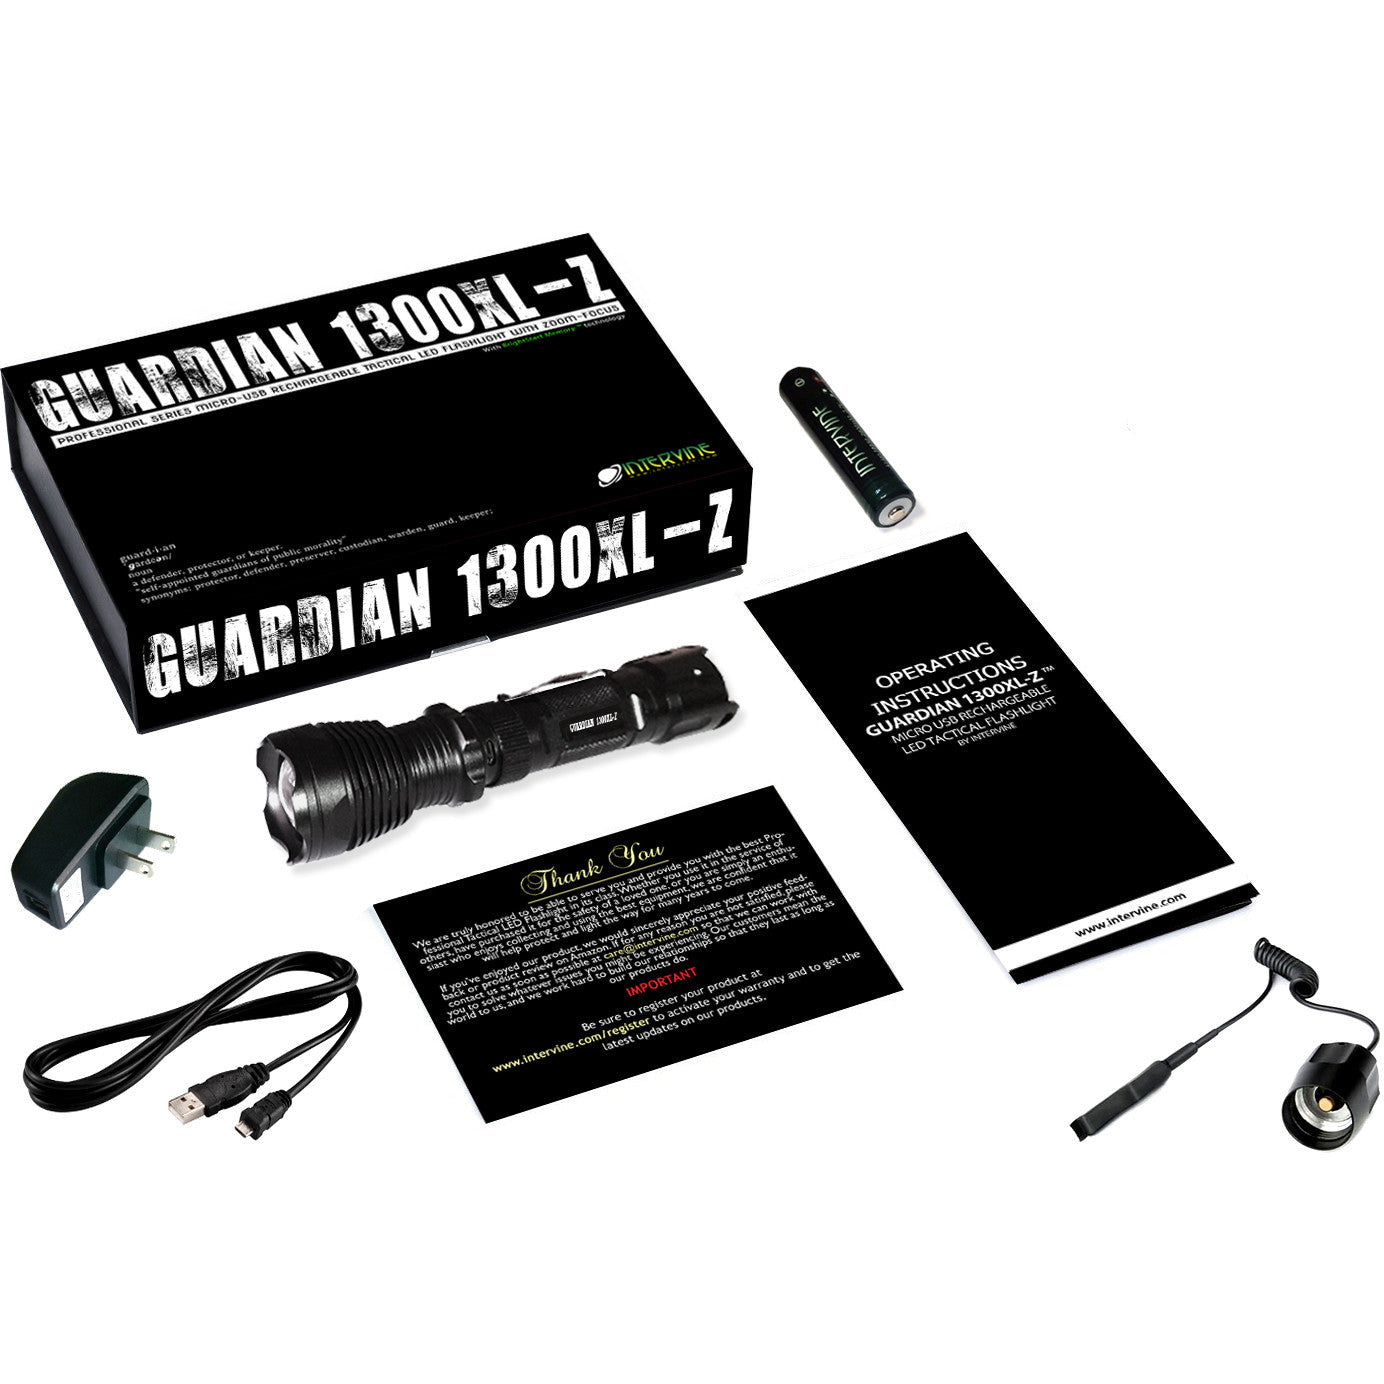 Guardian 1300XL-Z Tactical Flashlight